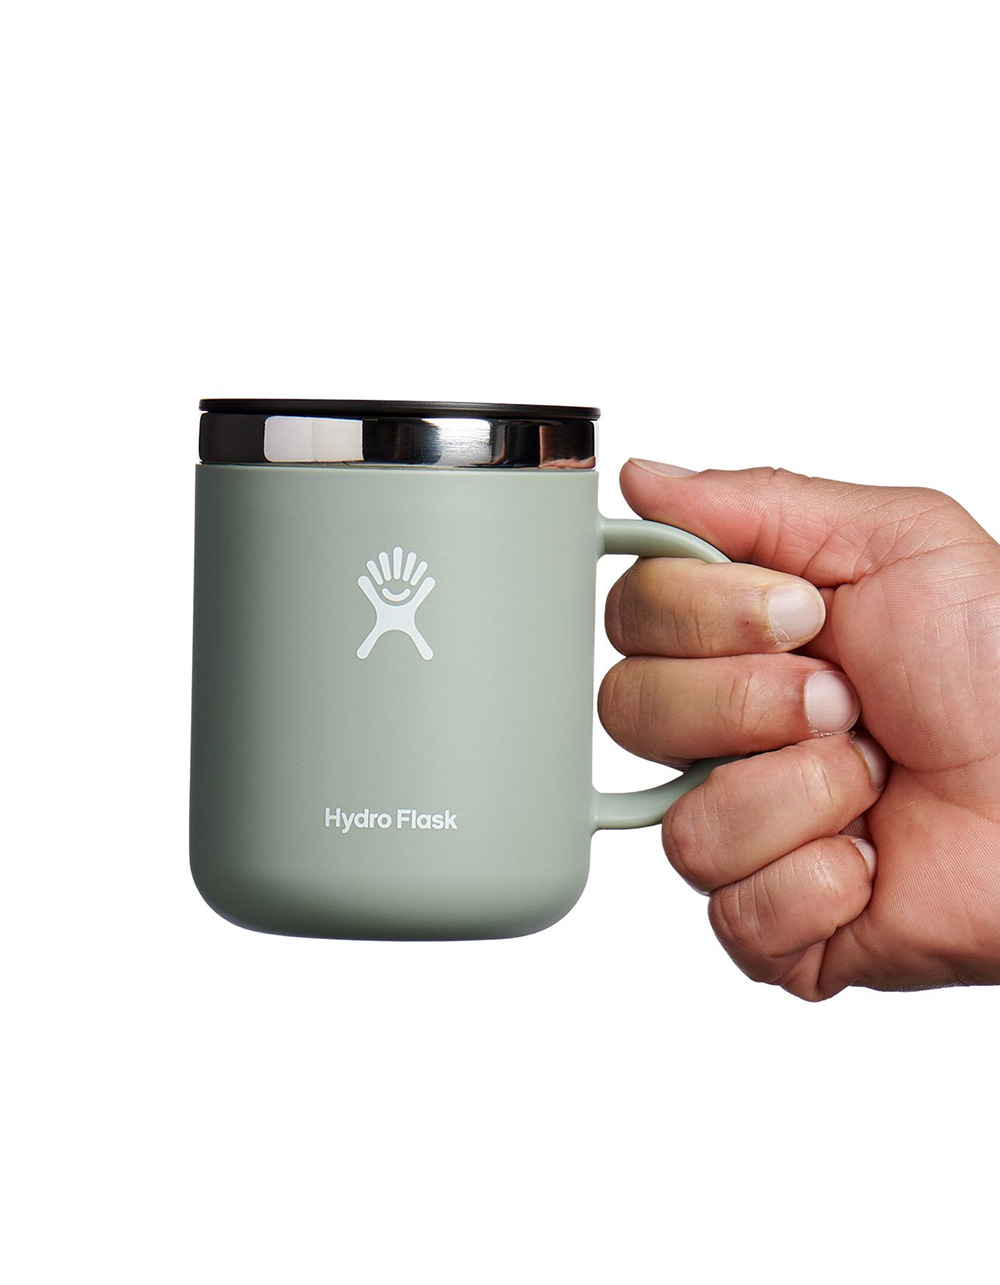 Hydroflask 12 oz Coffee Mug - Off Docks